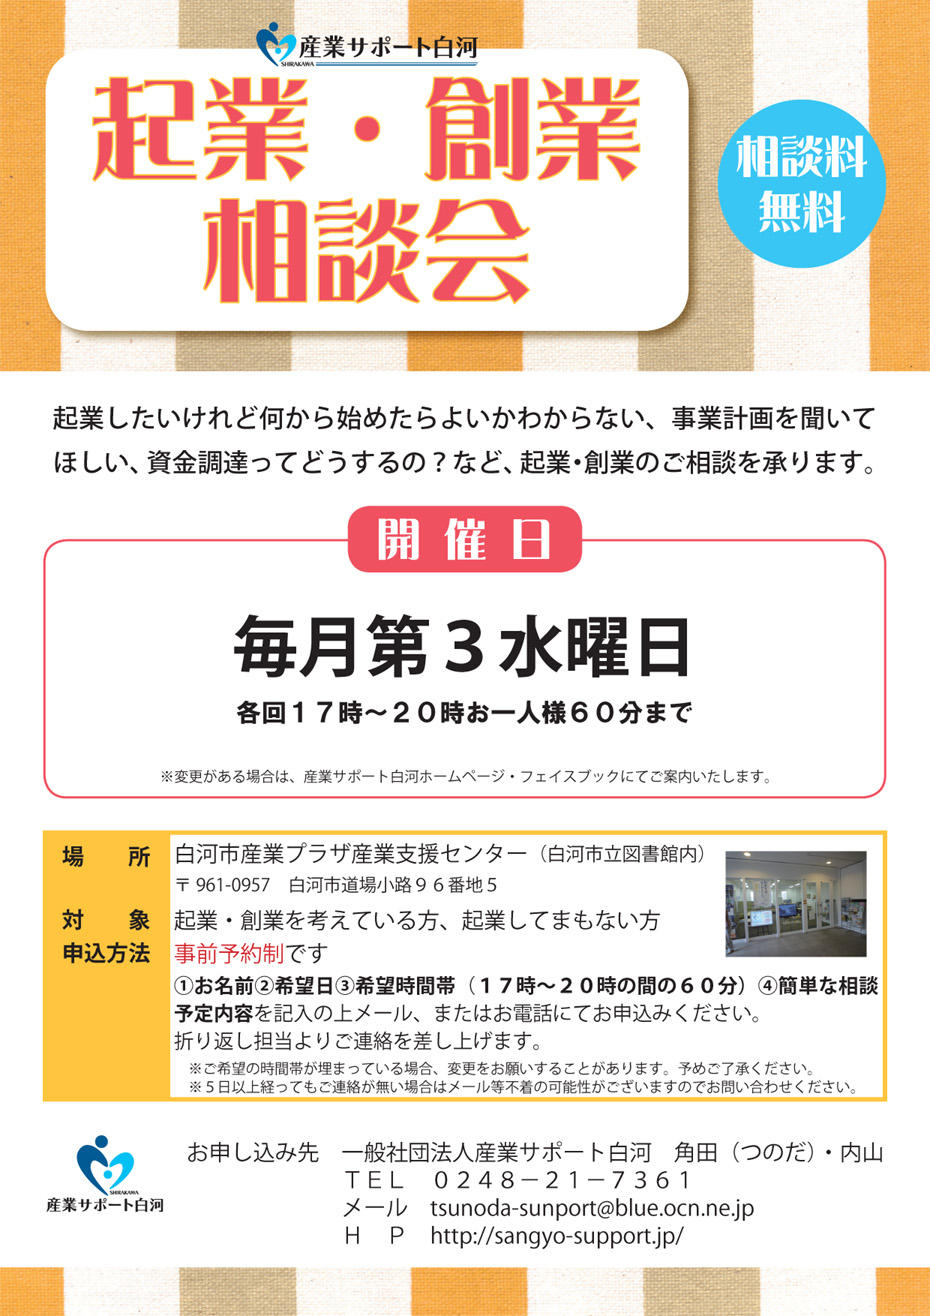 http://sangyo-support.jp/File/2018/05/09/kigyosogyosoudankai.jpg